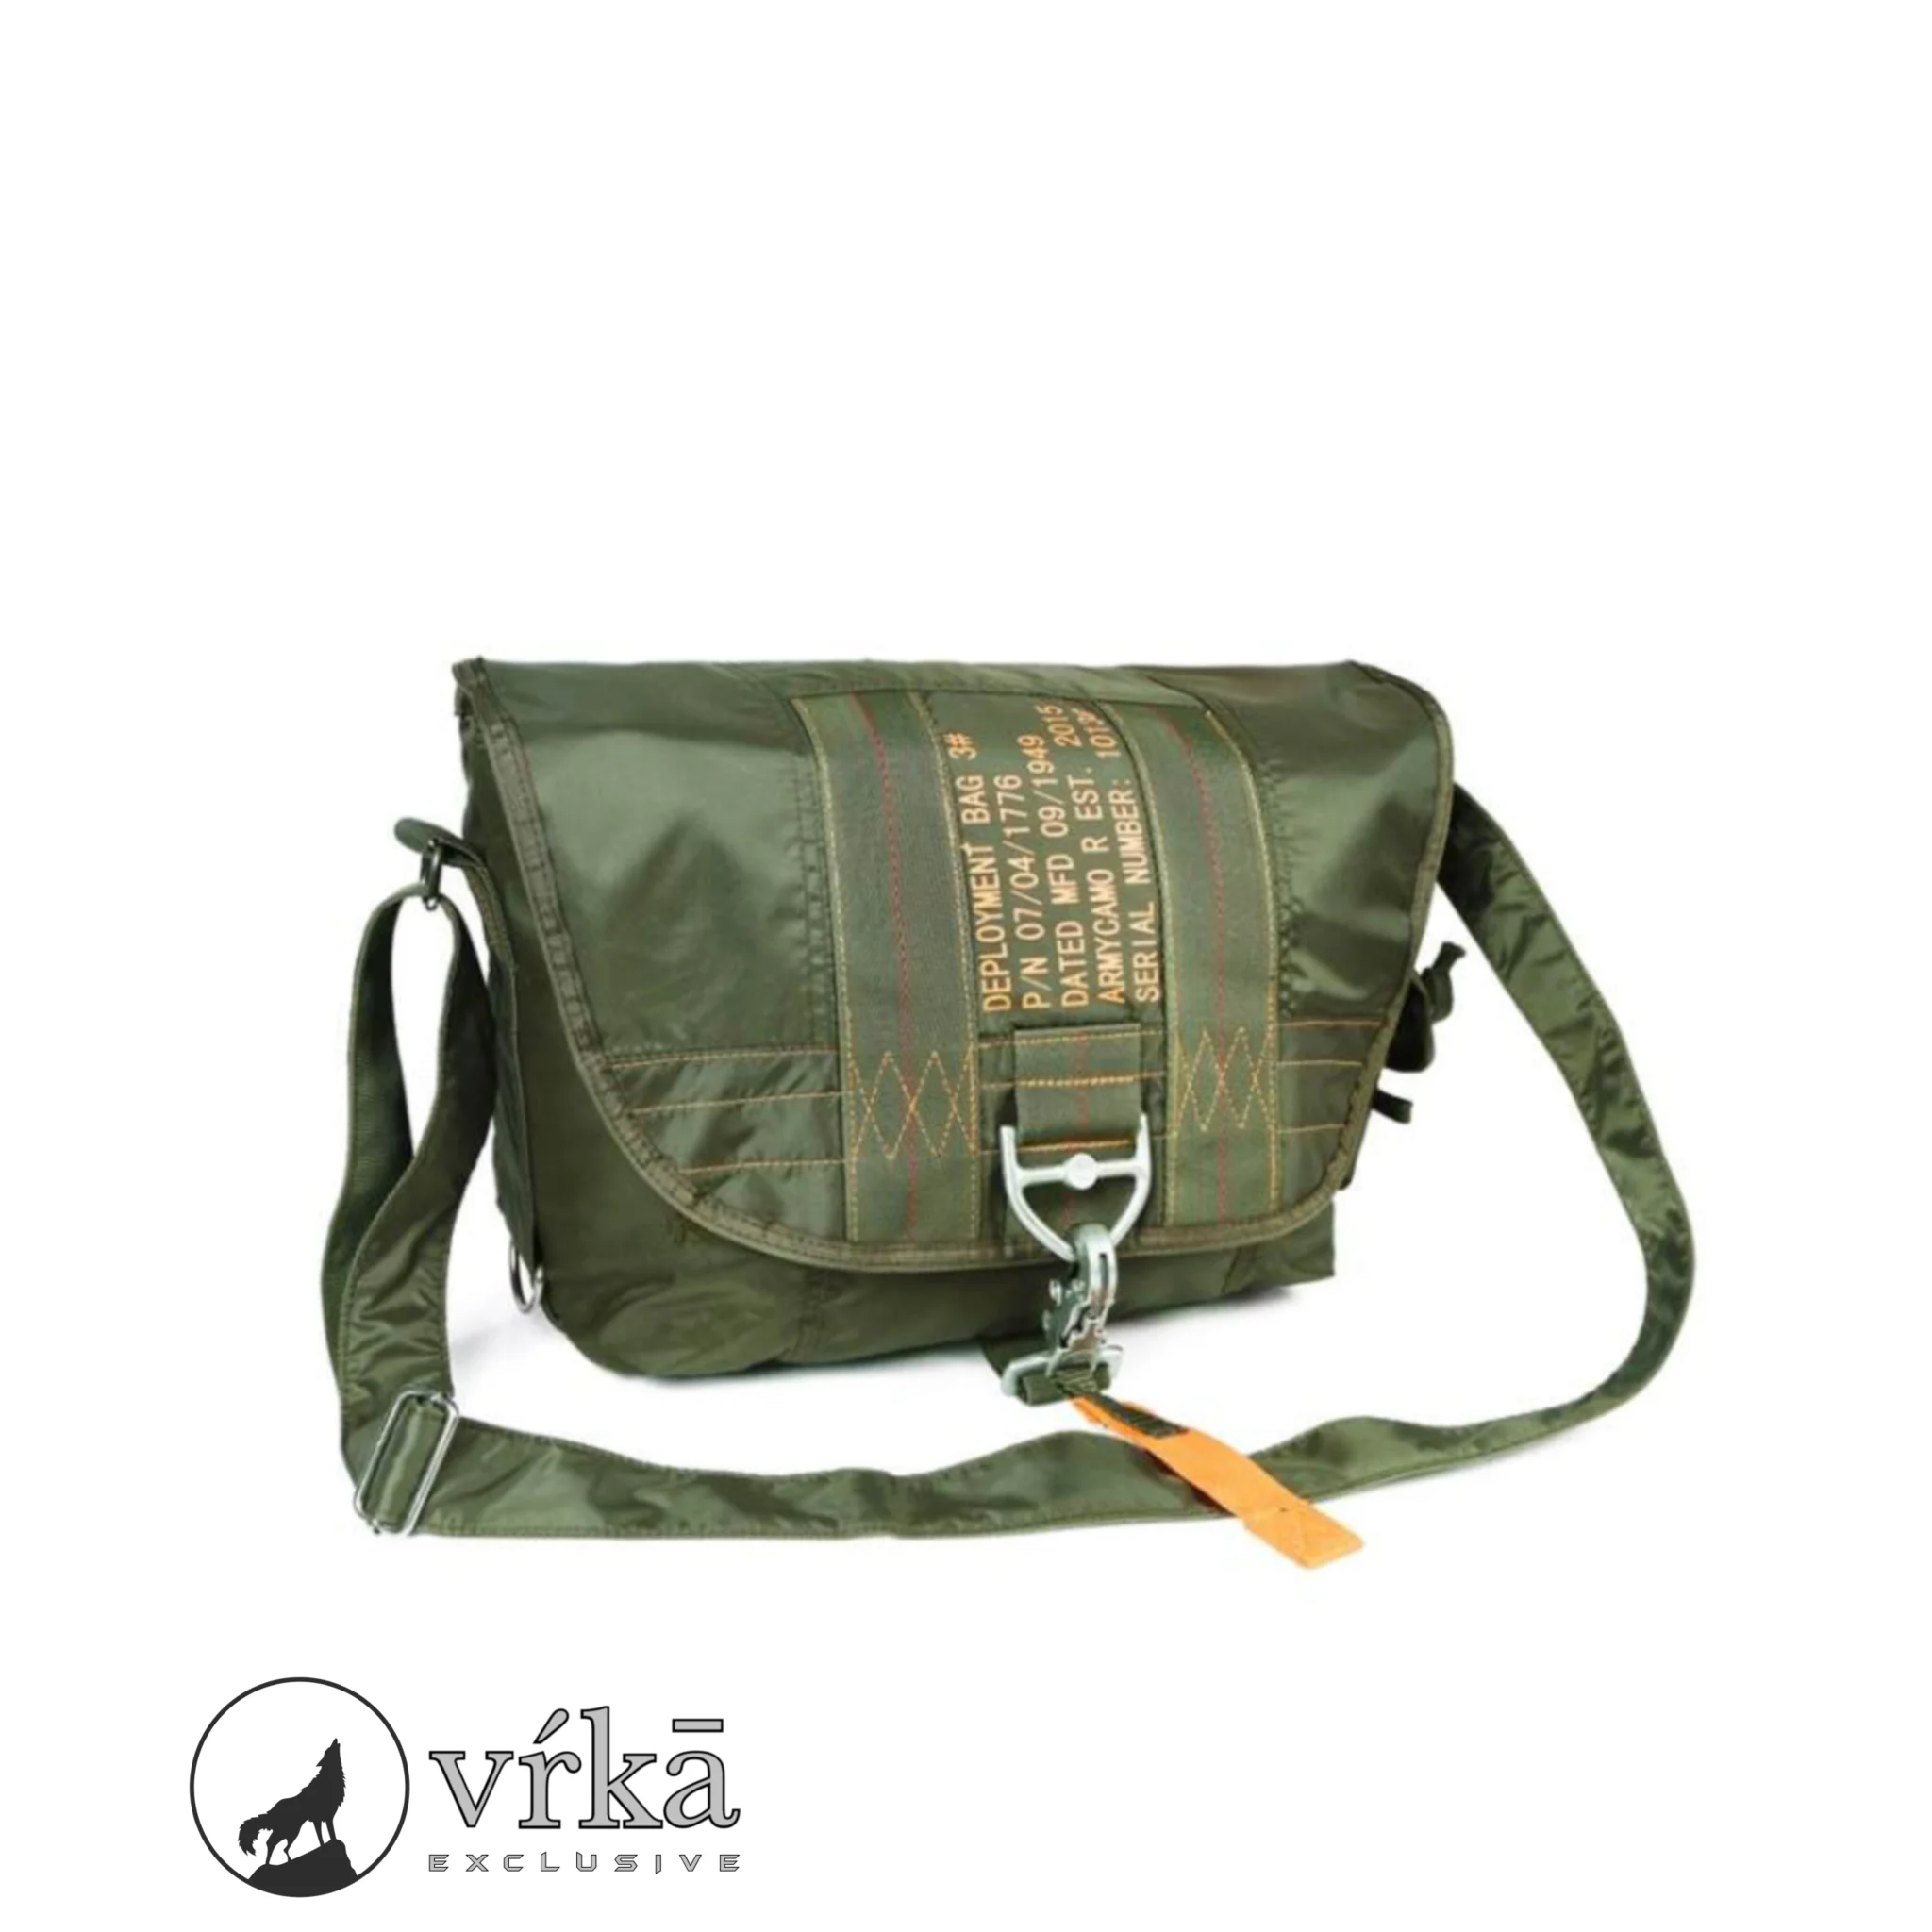 Featured image for “Parachute Deployment Bag : Flight Shoulder Bag”